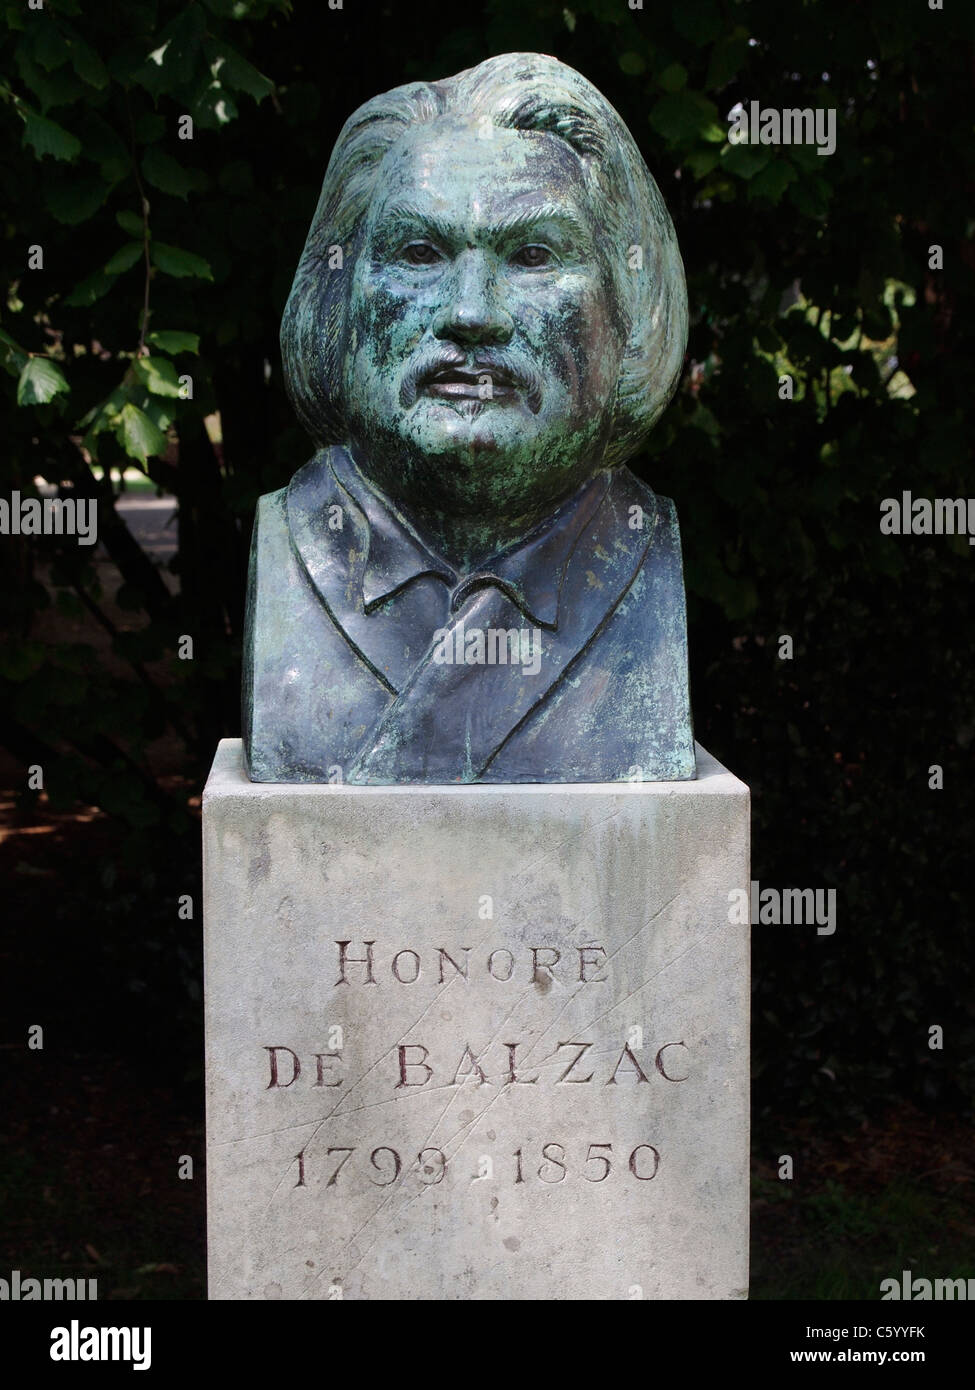 Portrait bust of Honore de Balzac in a park in Vendome, Loire valley, France. de Balzac studied in Vendome. Stock Photo